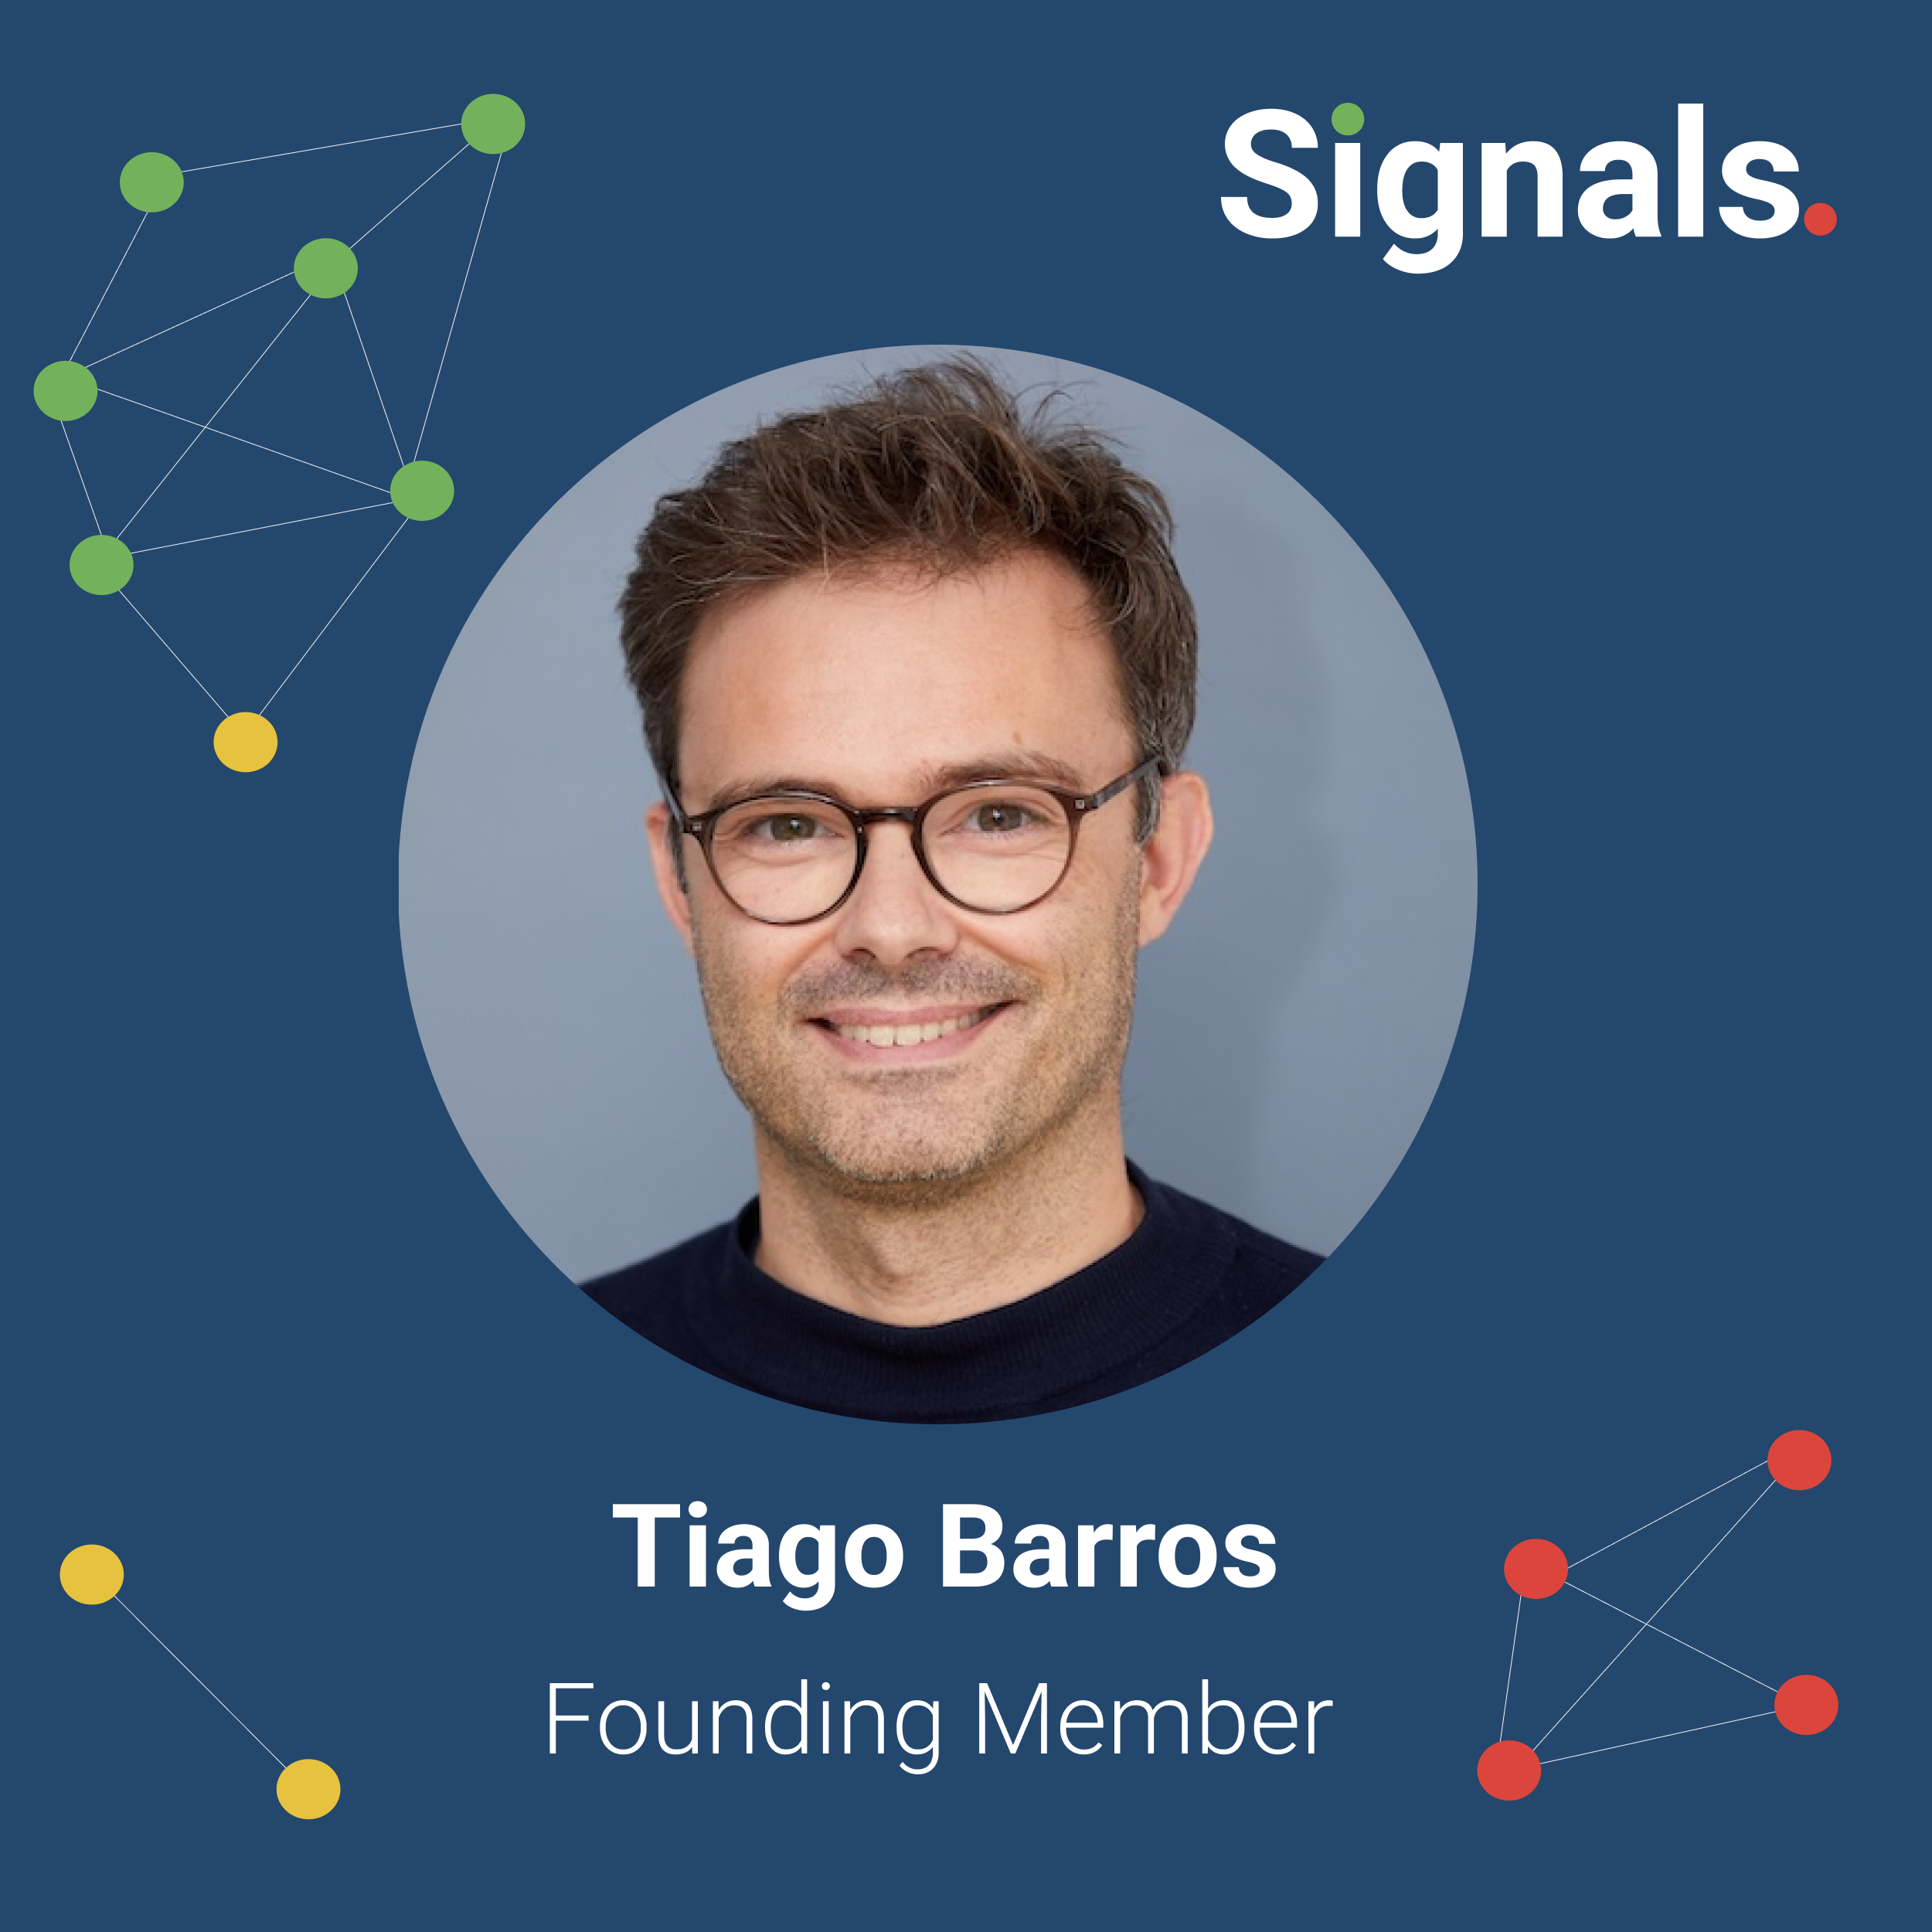 Tiago Barros joins Signals as Founding Member